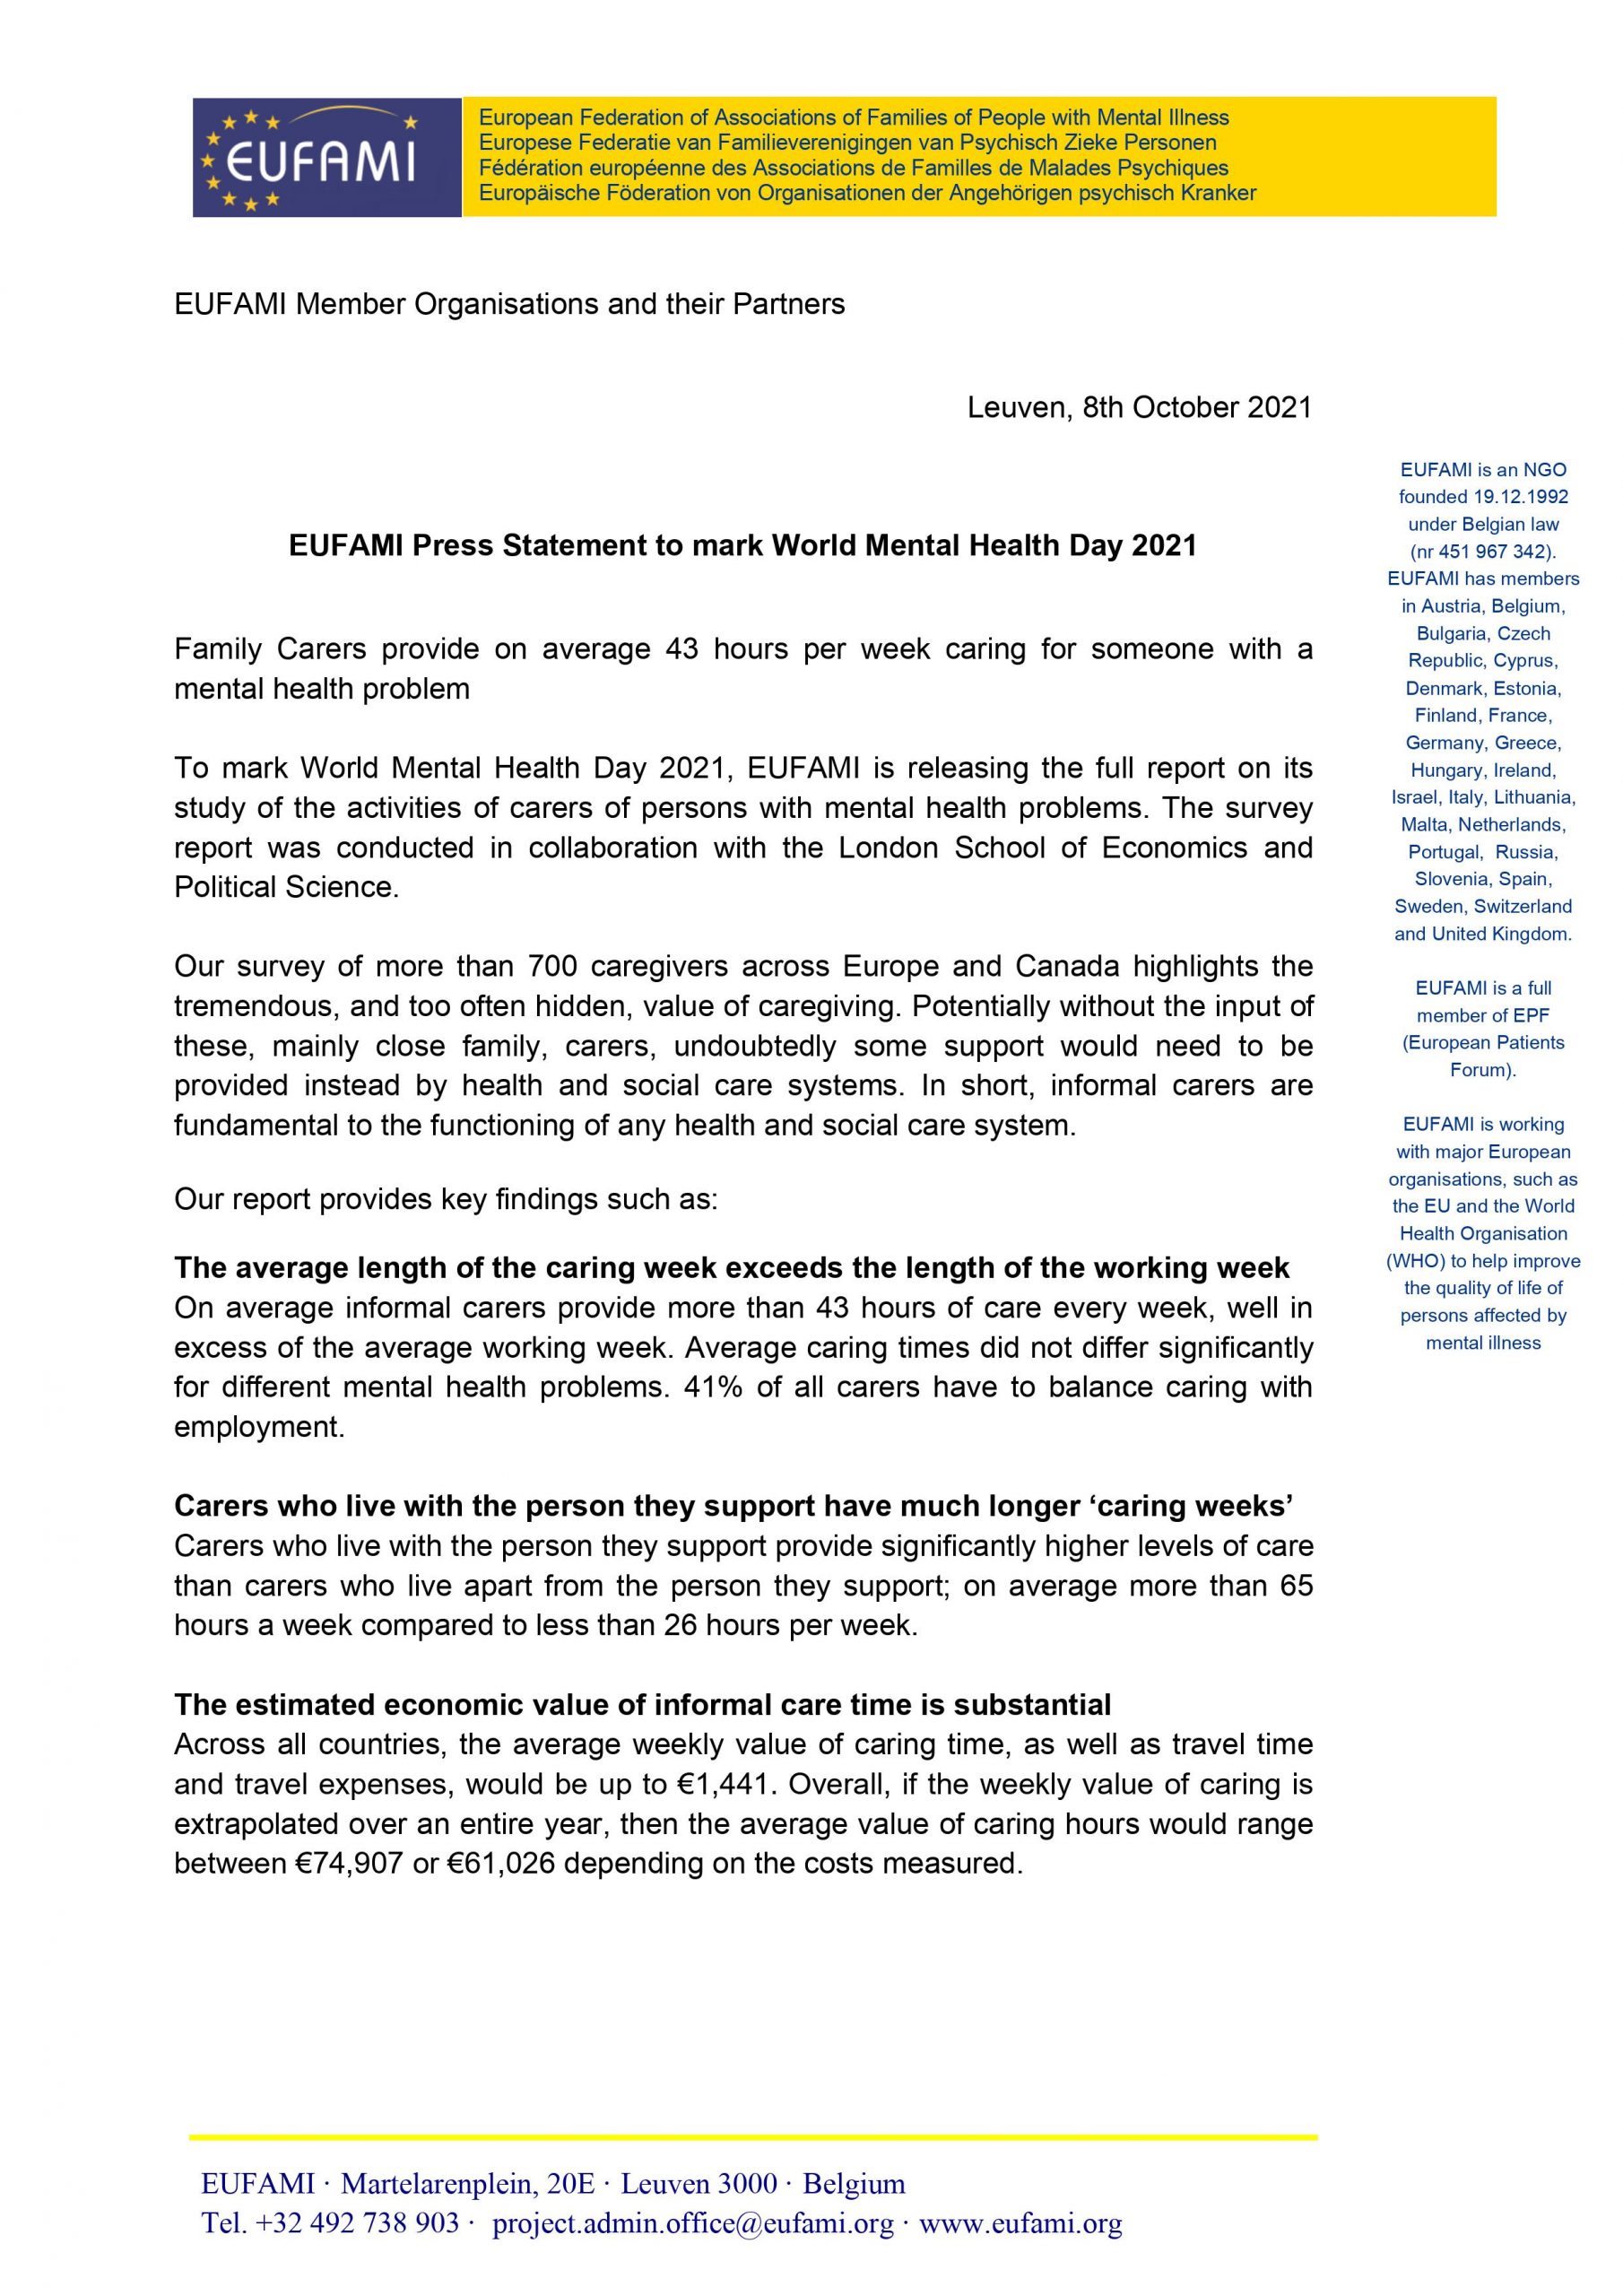 EUFAMI Press Statement to mark World Mental Health Day 2021-2